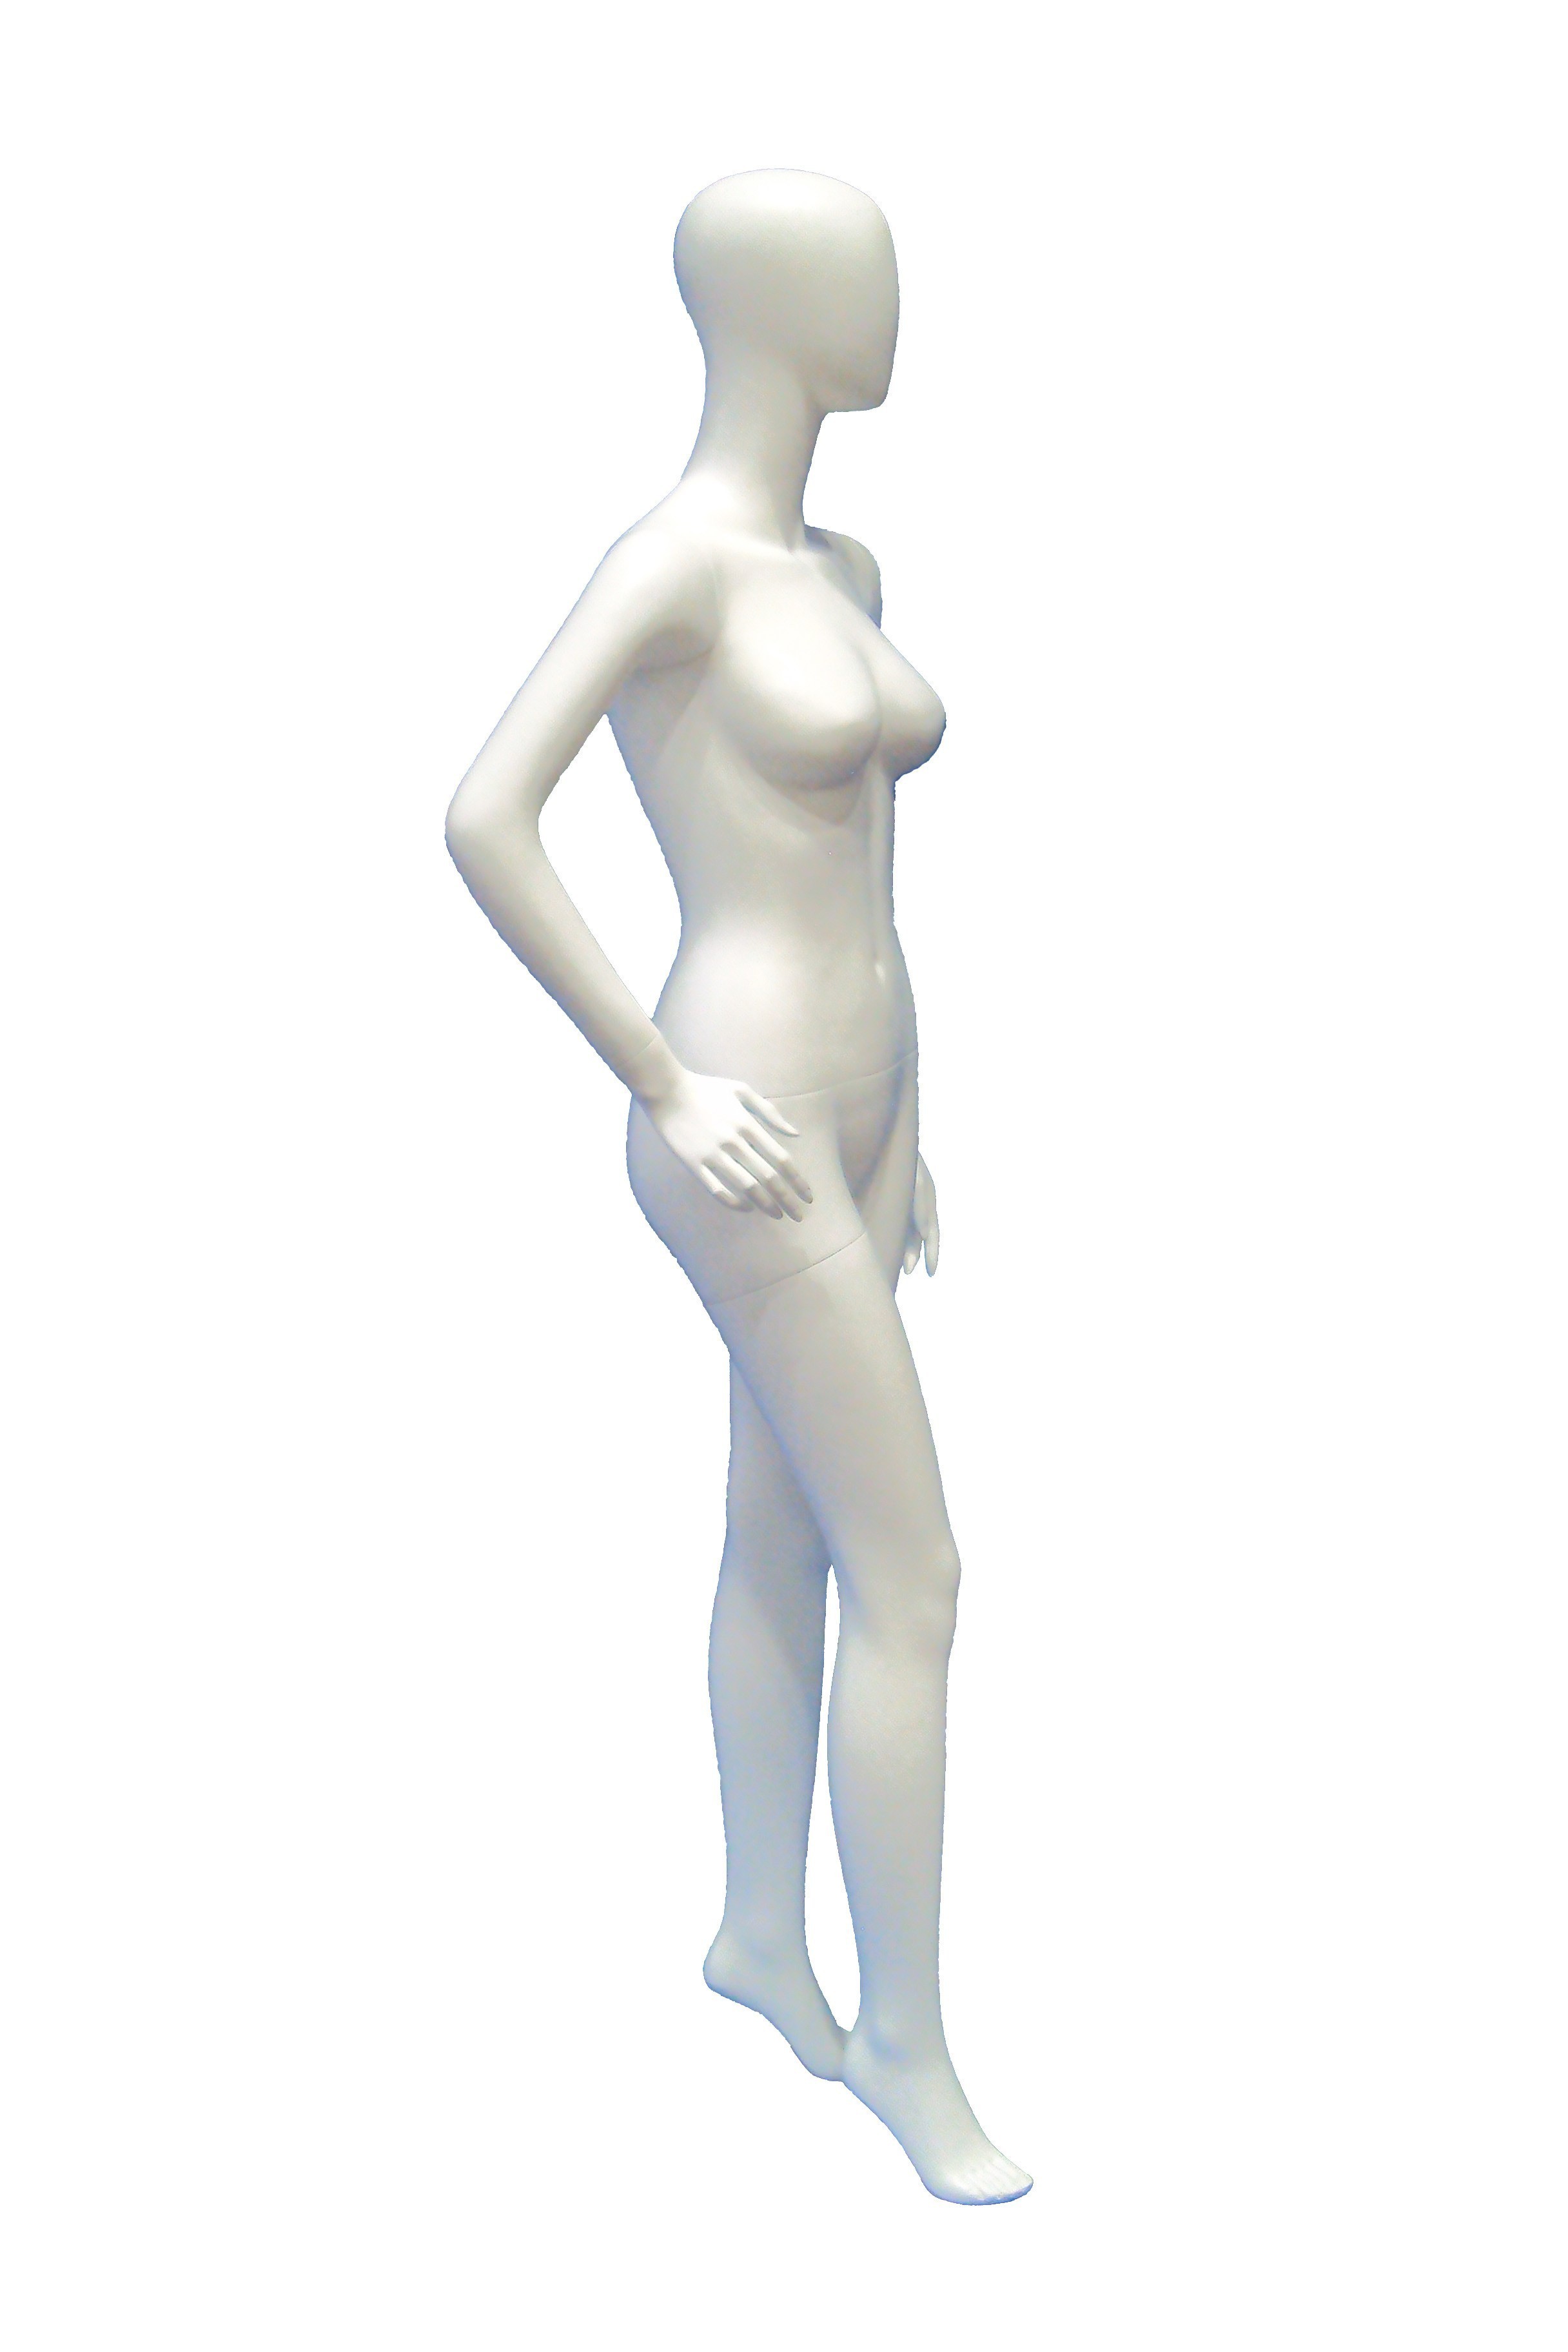 Mujer maniqui estilizada blanco mate 182 cm.